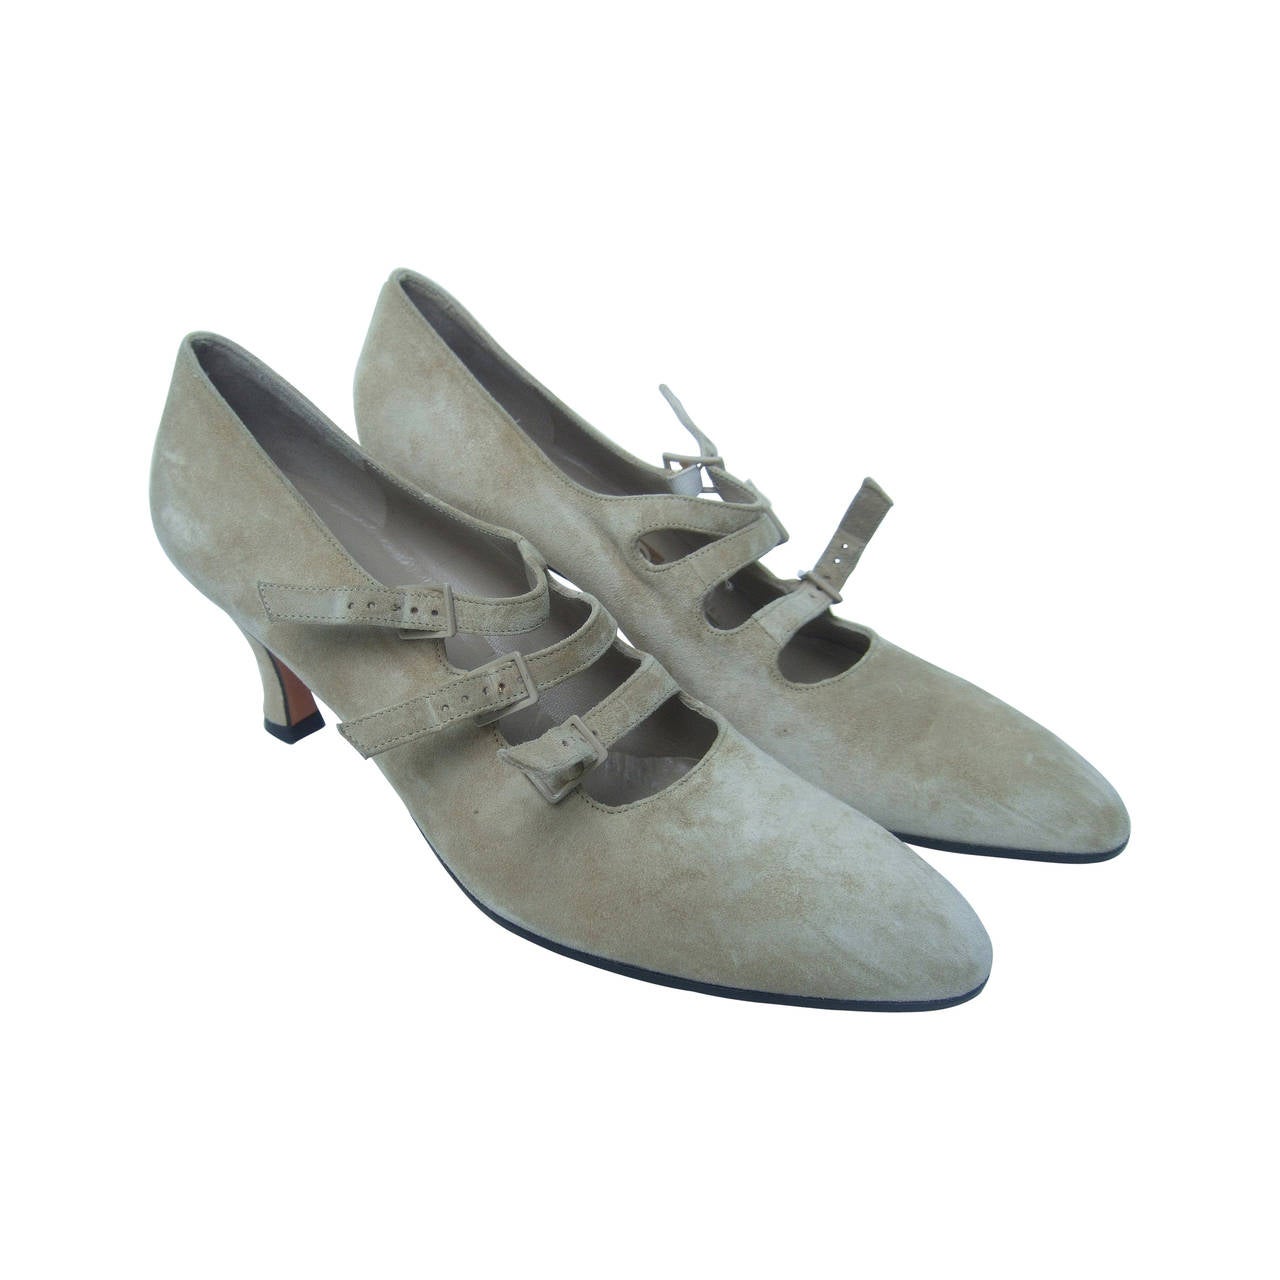 US 8D classic pointy heel shoes Schoenen damesschoenen Pumps Vintage Salvatore Ferragamo charcoal gray and dark brown leather pumps with snakeskin 